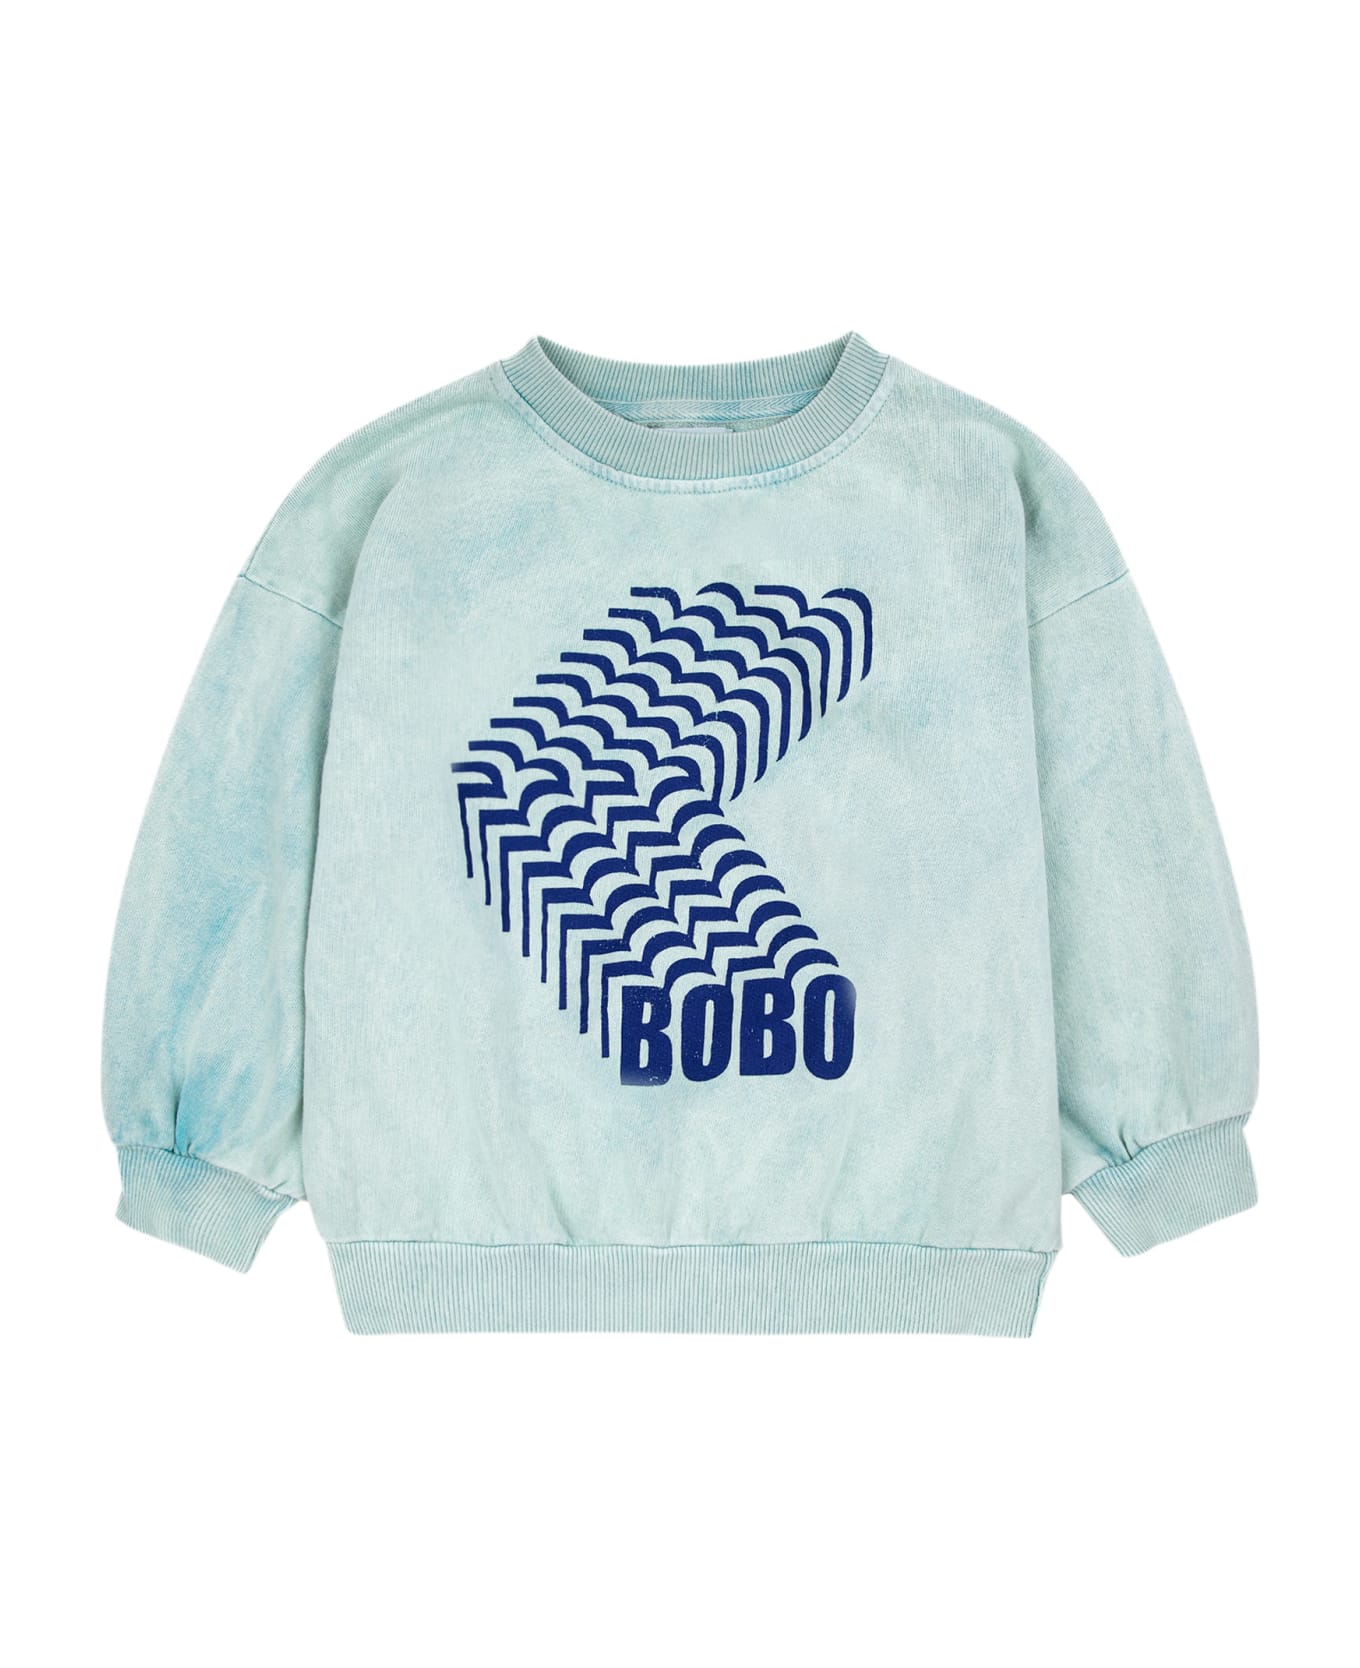 Bobo Choses Light Blue Sweatshirt For Kids With Logo - Light Blue